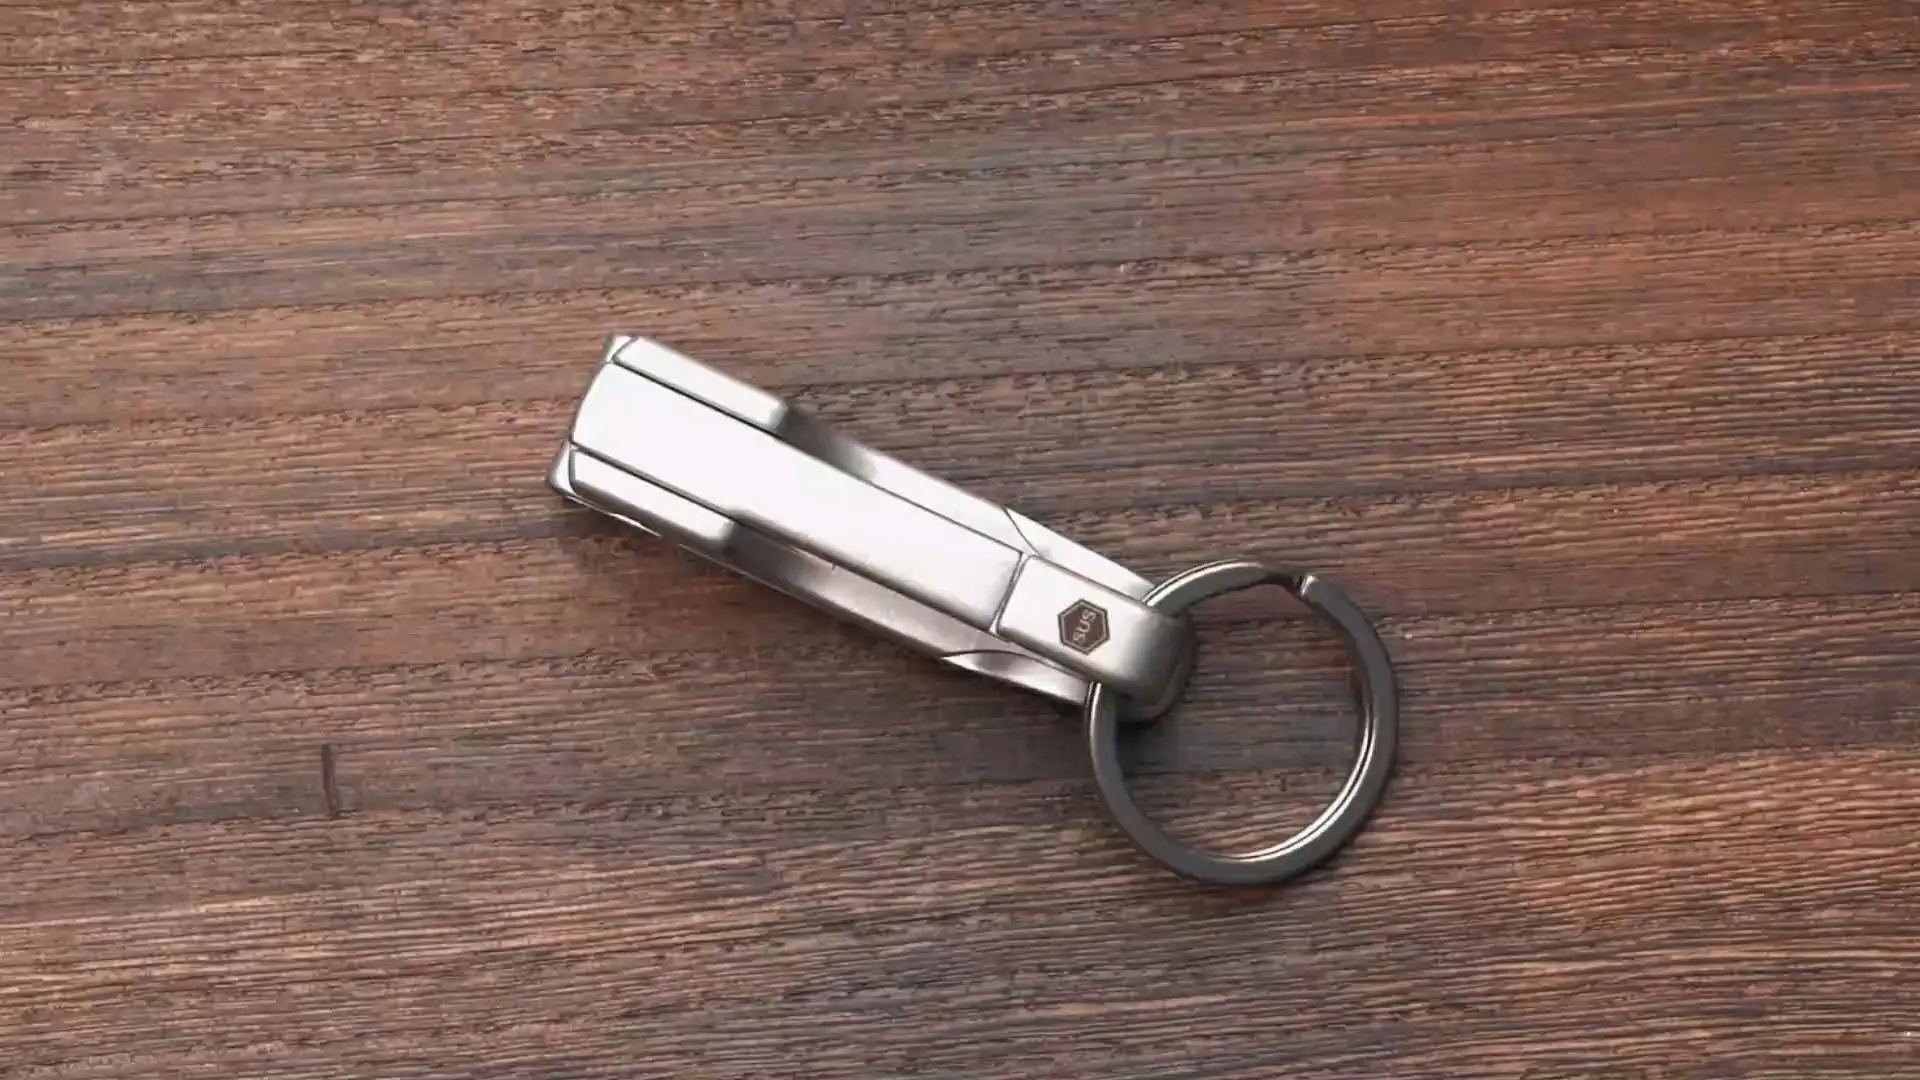 KM03 Titanium Alloy Belt Loop Keychain Clip